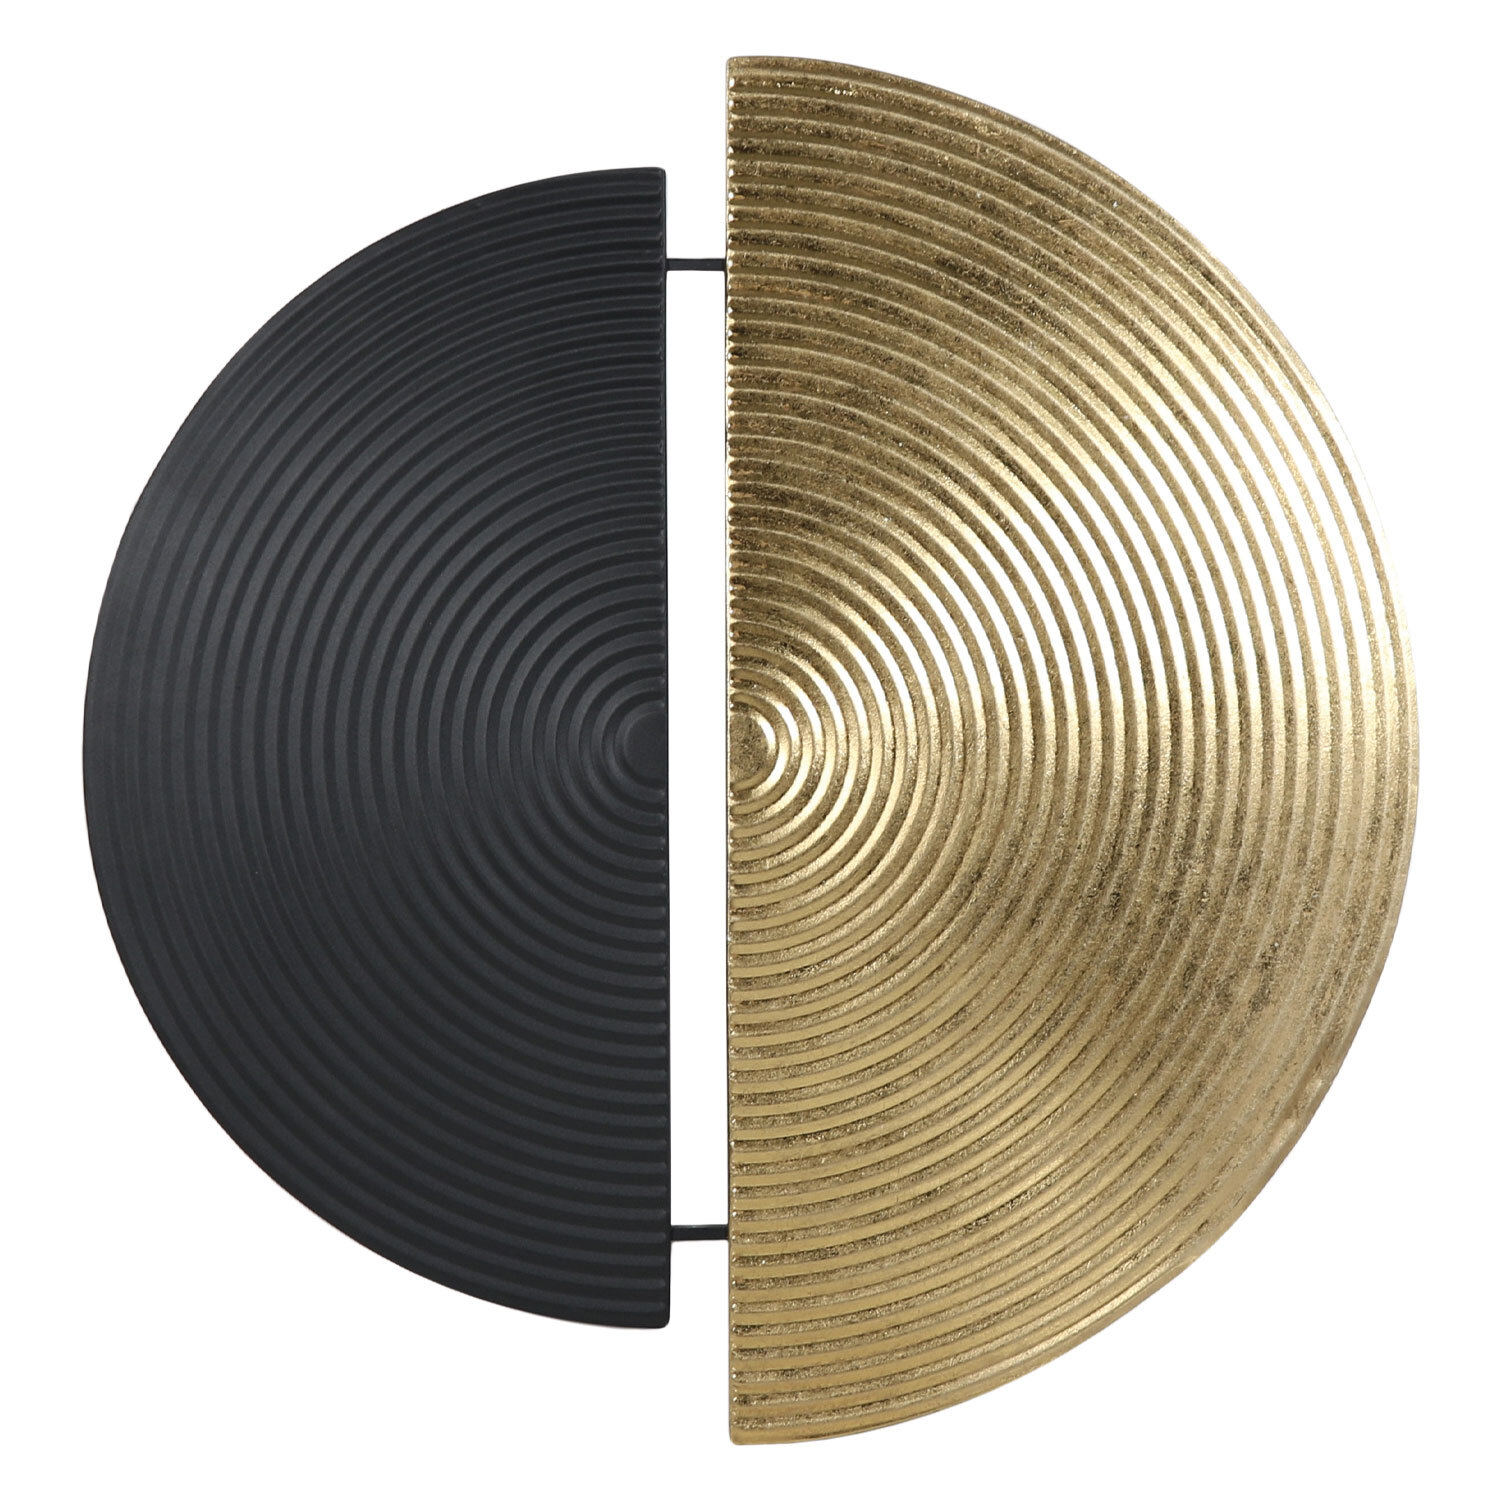 Geometric Black and Gold Semi Circles Metal Art Decoration Image 1